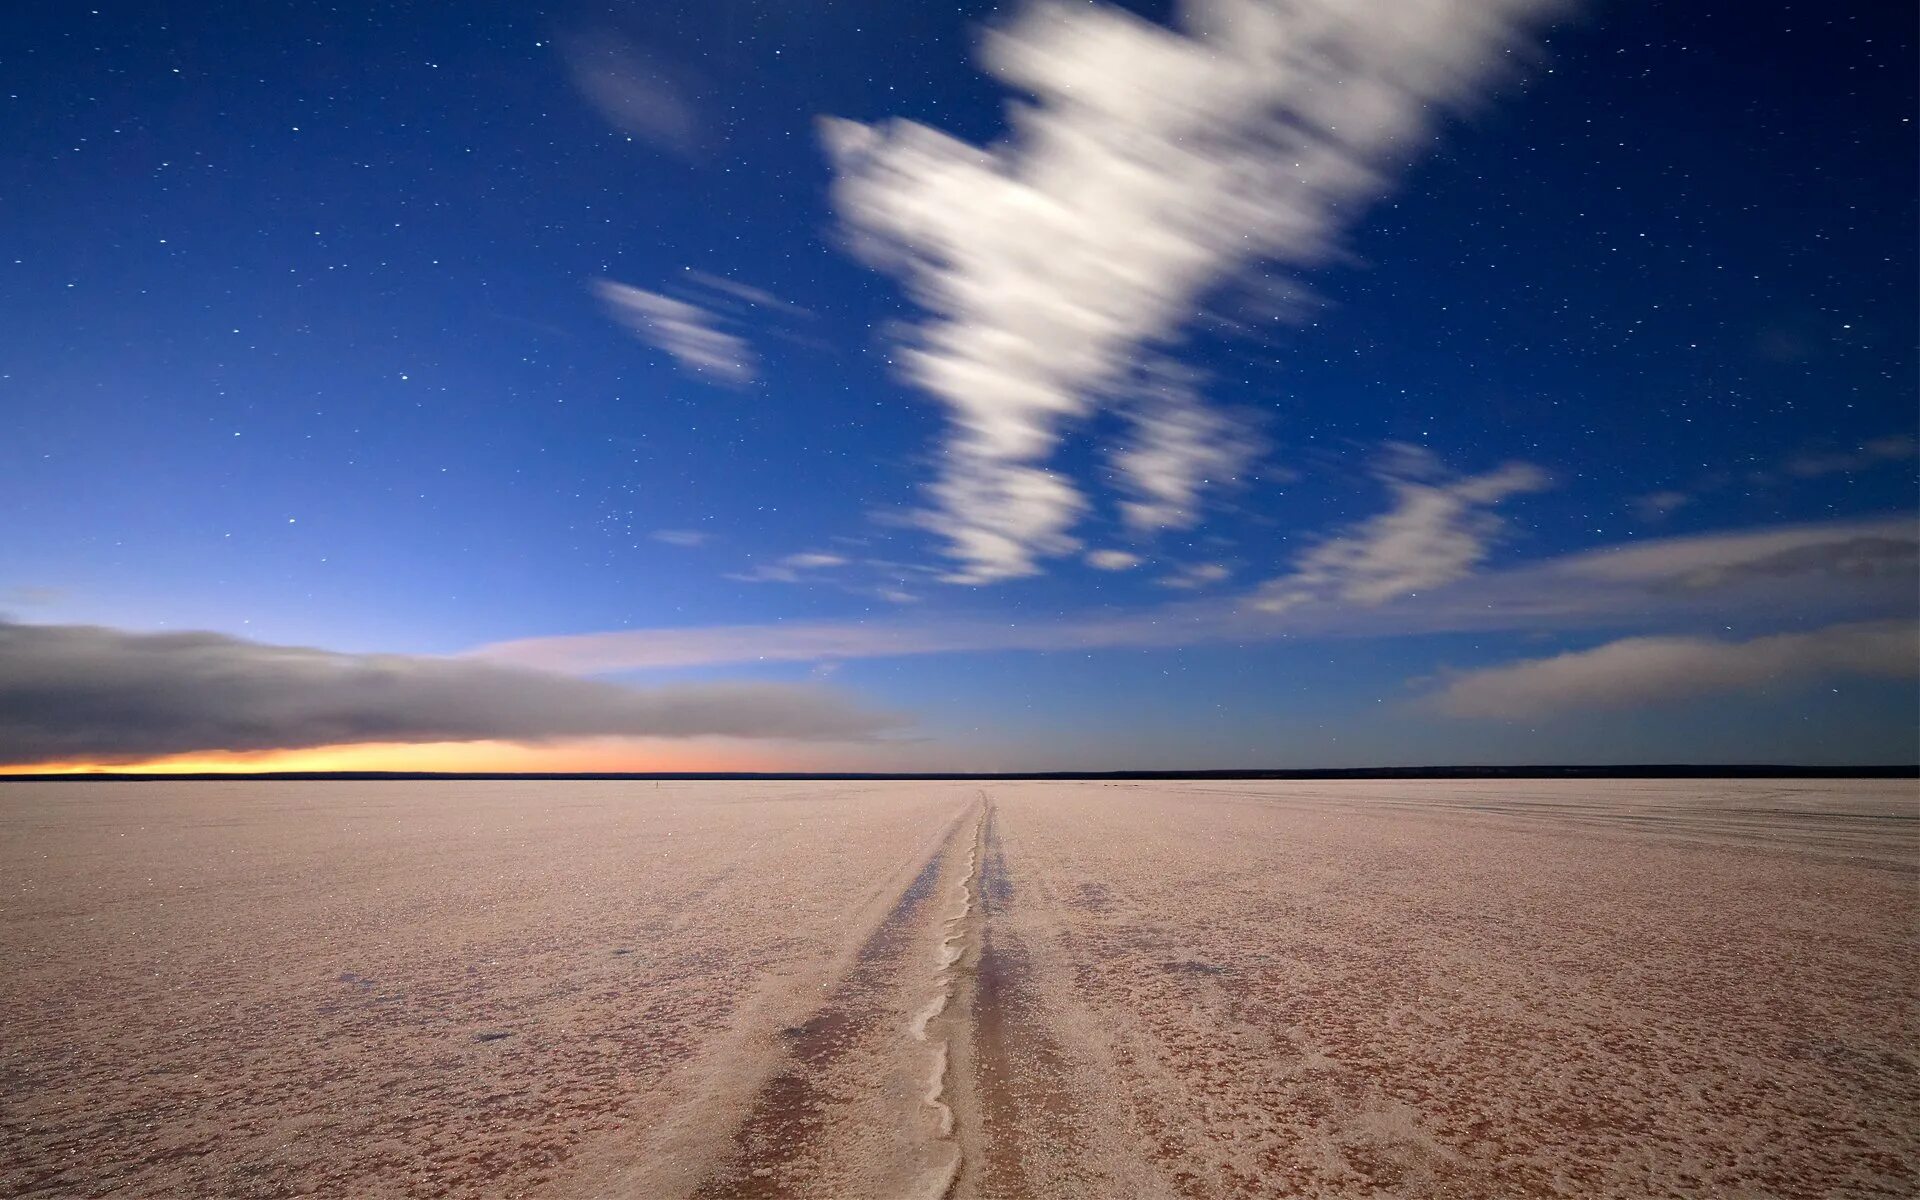 Горизонт линия горизонта. Салар де Уюни Боливия. Небо Горизонт. Линия горизонта. Пустыня.